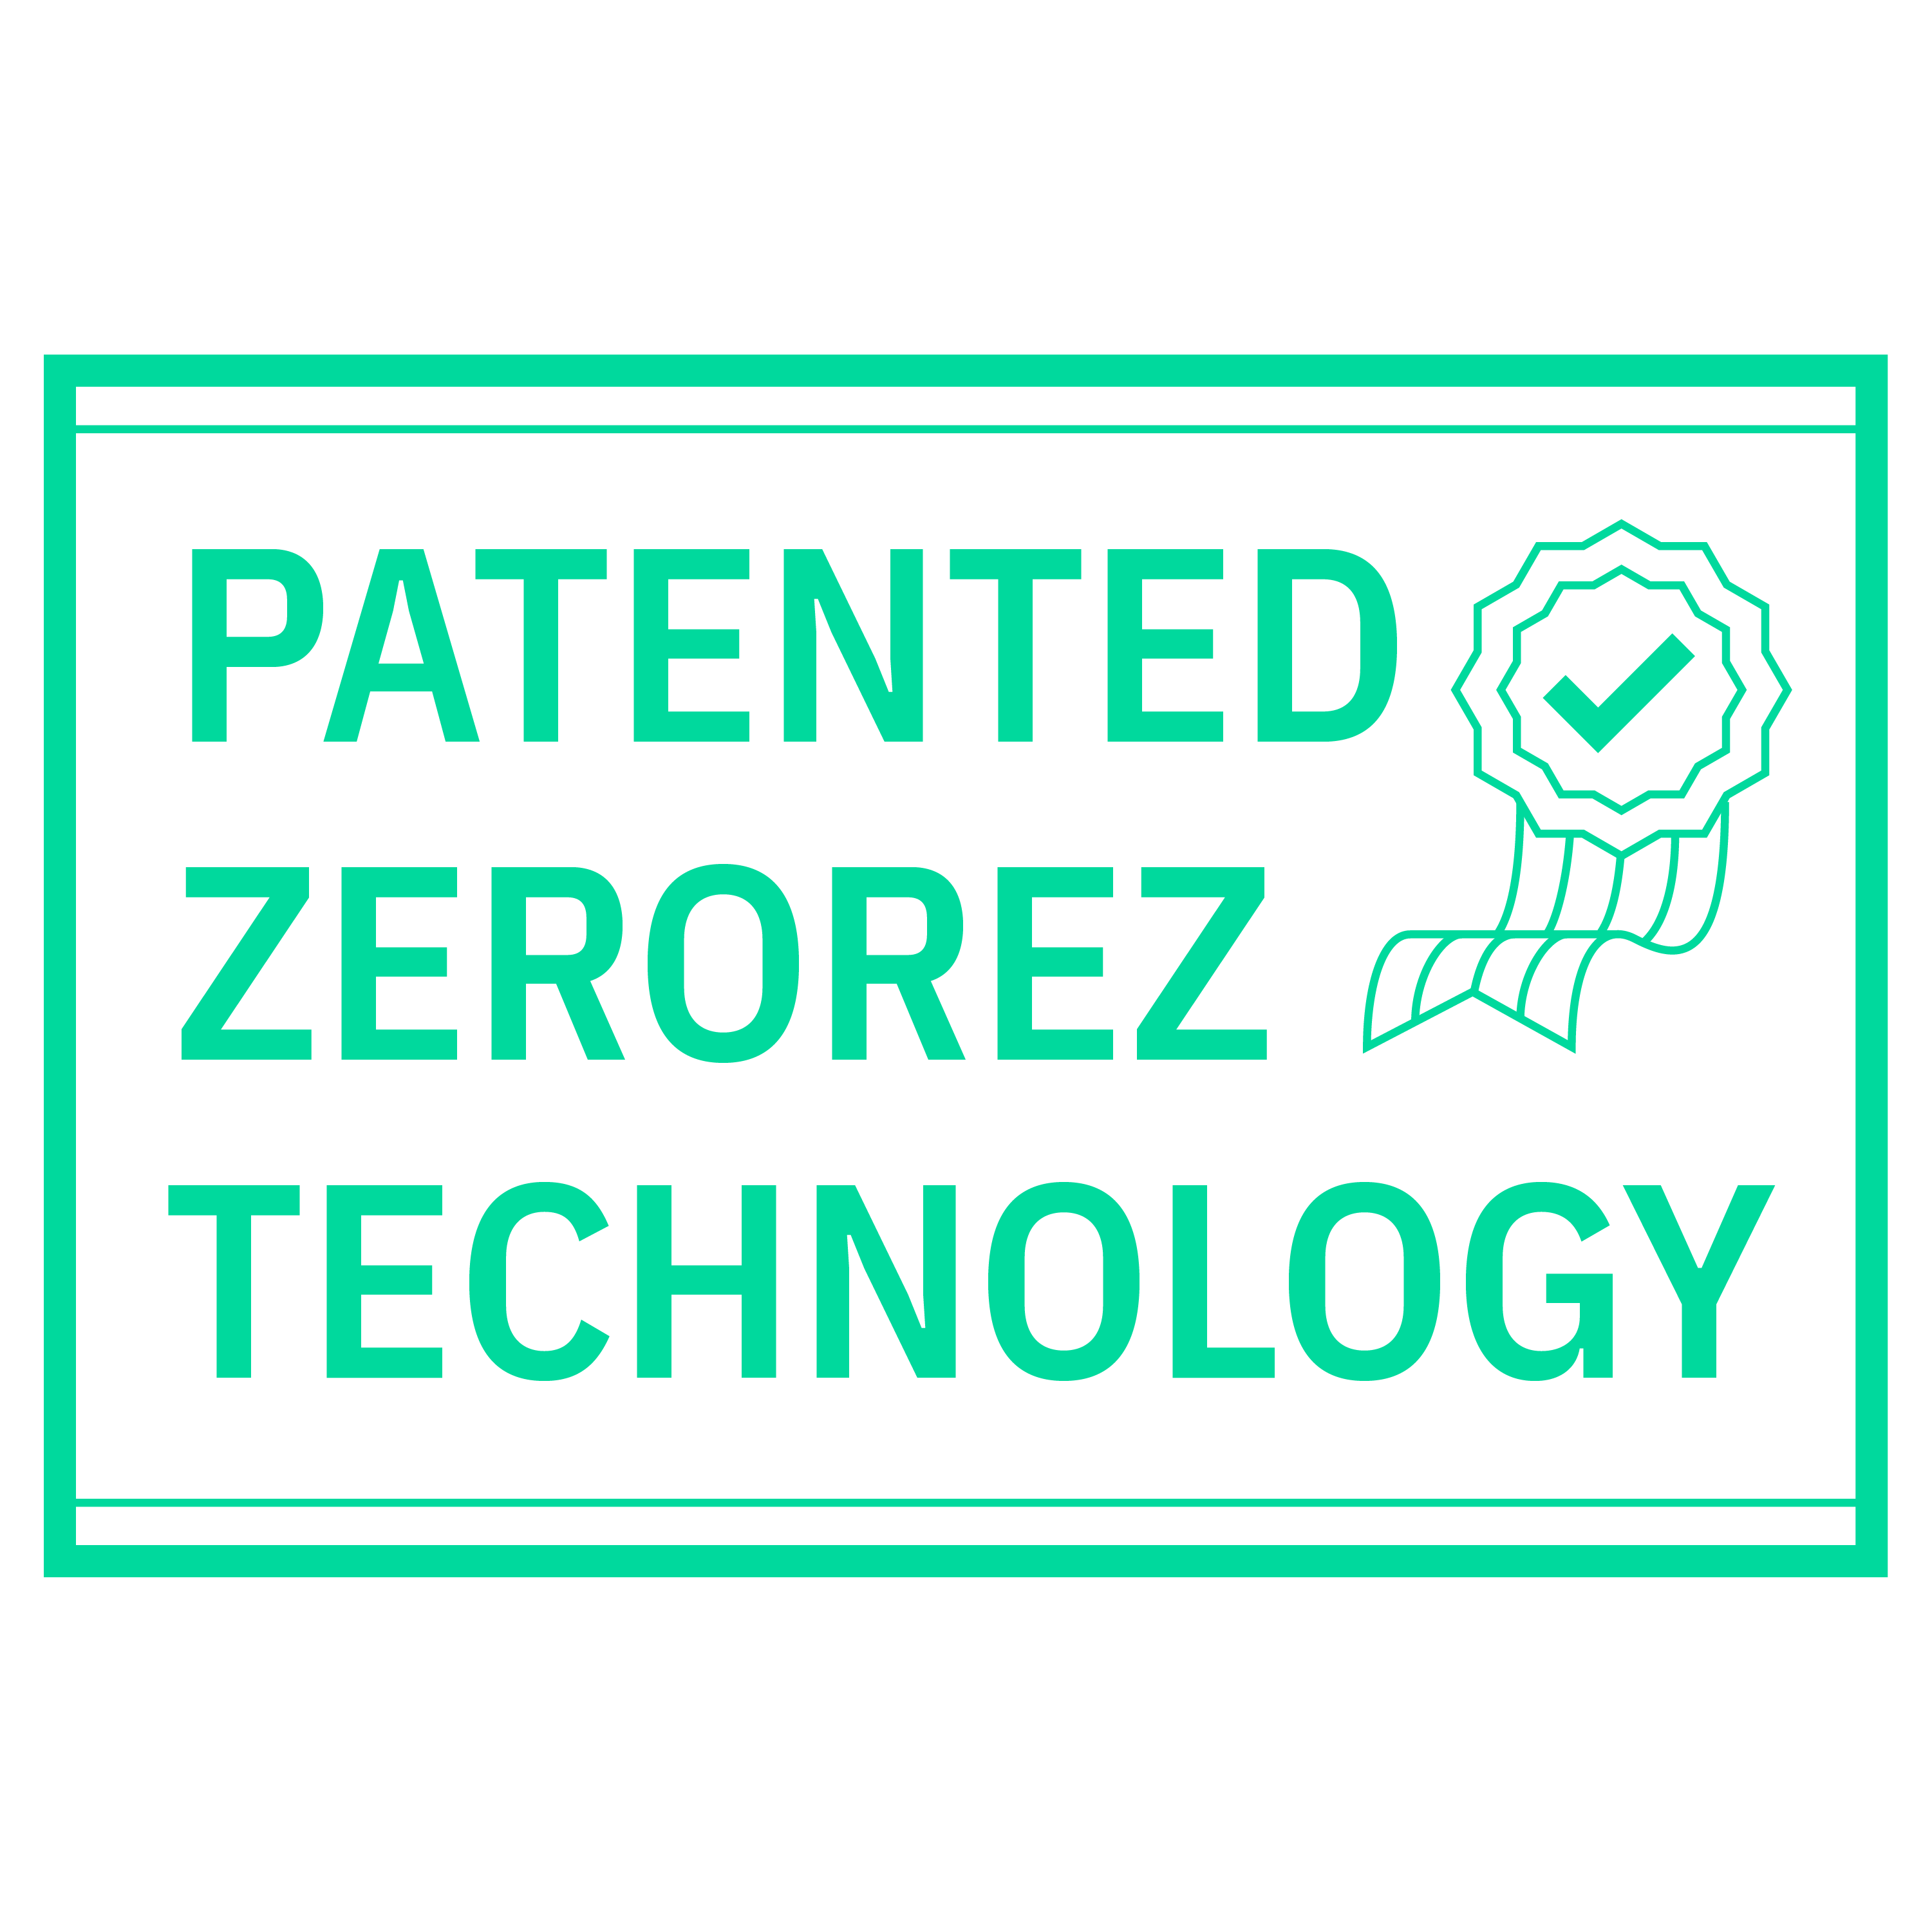 Learn about Zerorez's patented tech.